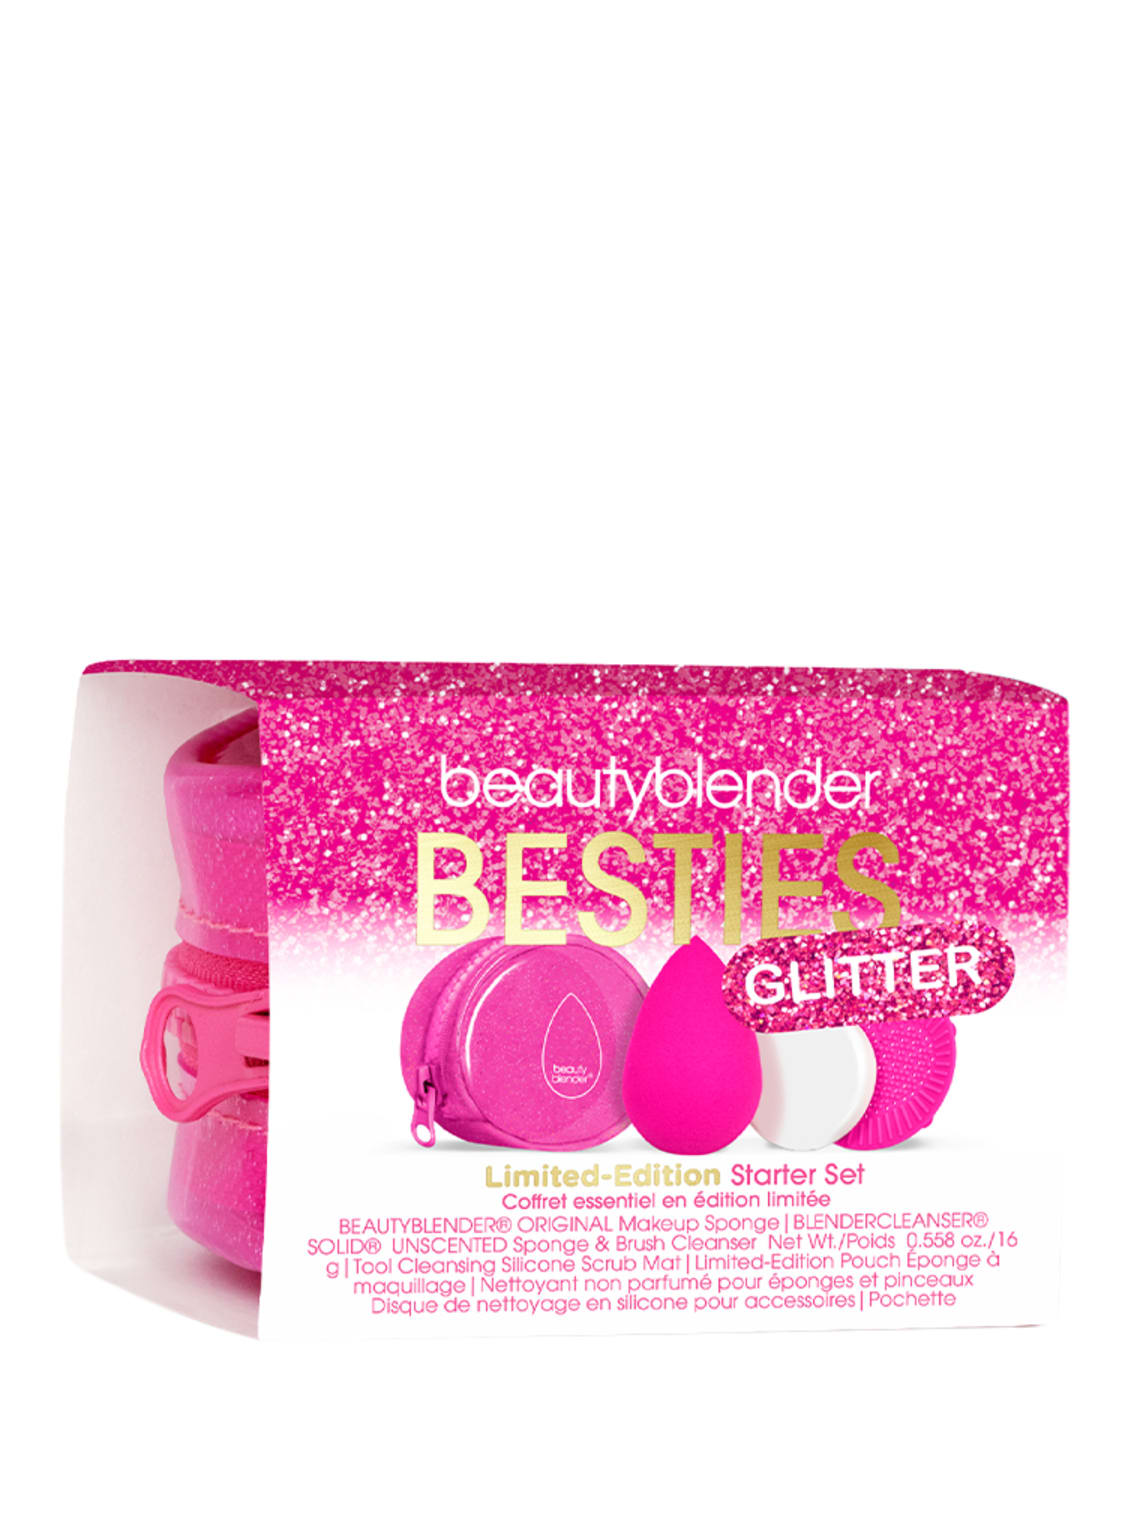 Image of The Original Beautyblender Glitter Besties Make-up Set